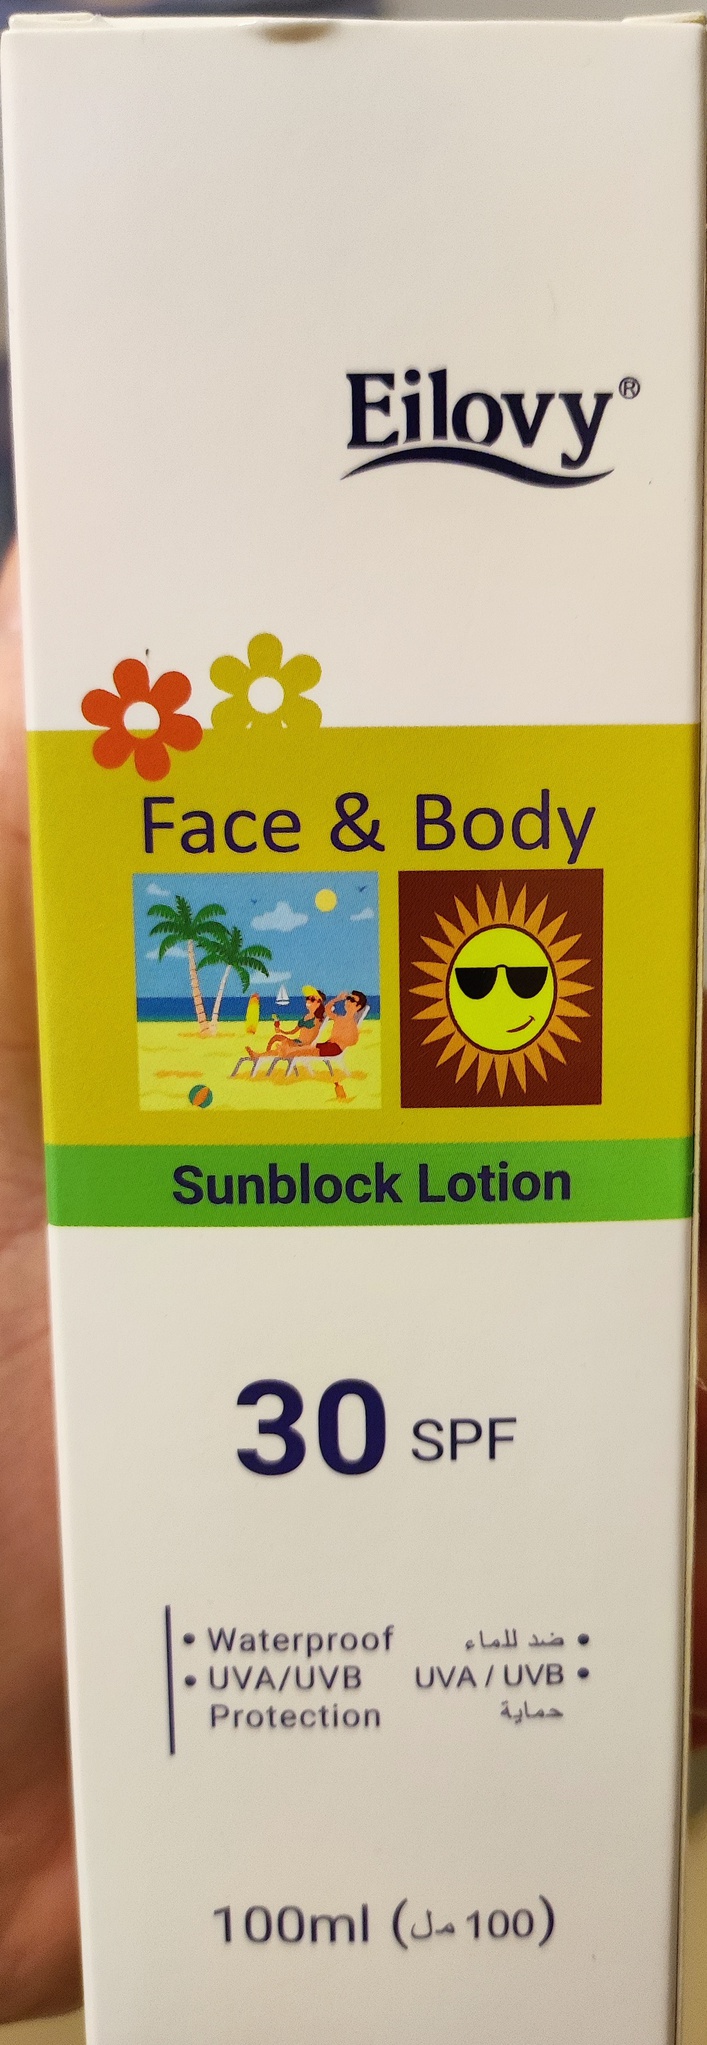 Eilovy Face & Body Sunblock Lotion SPF 30